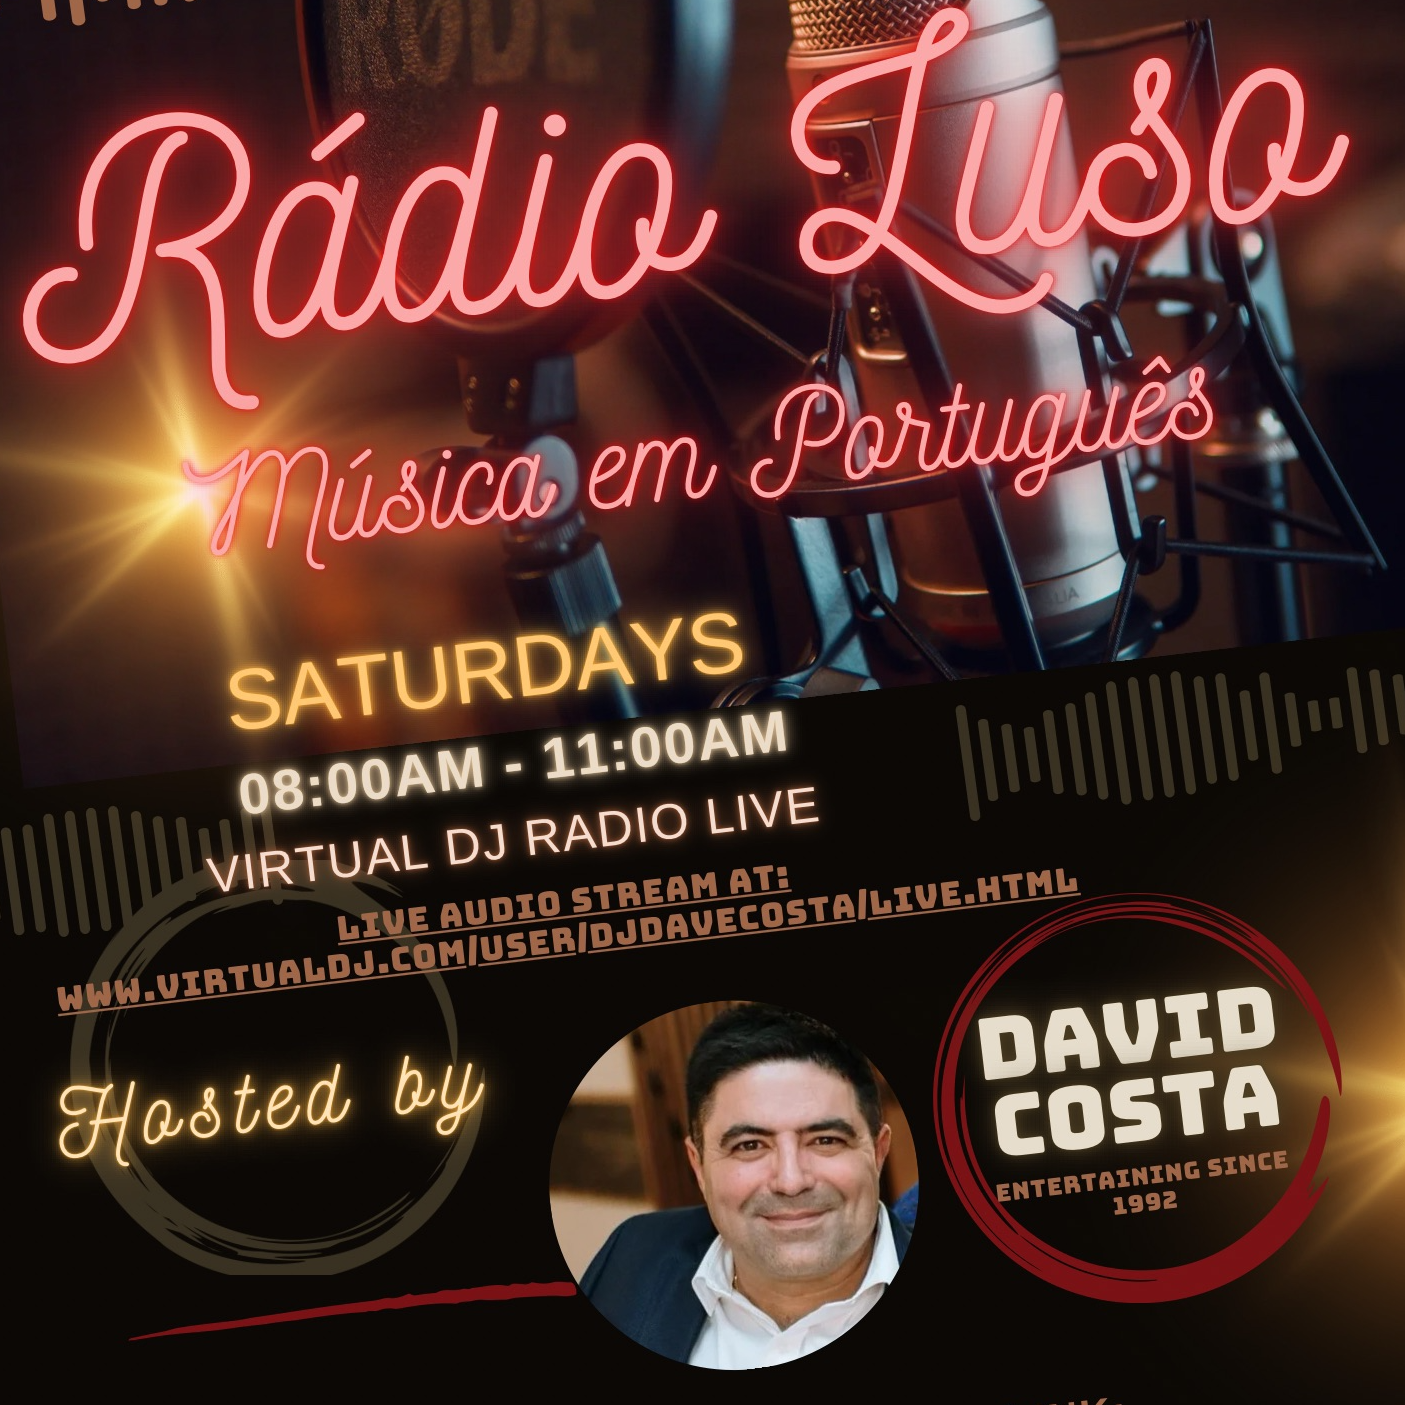 Radio Luso - DJ Dave Costa